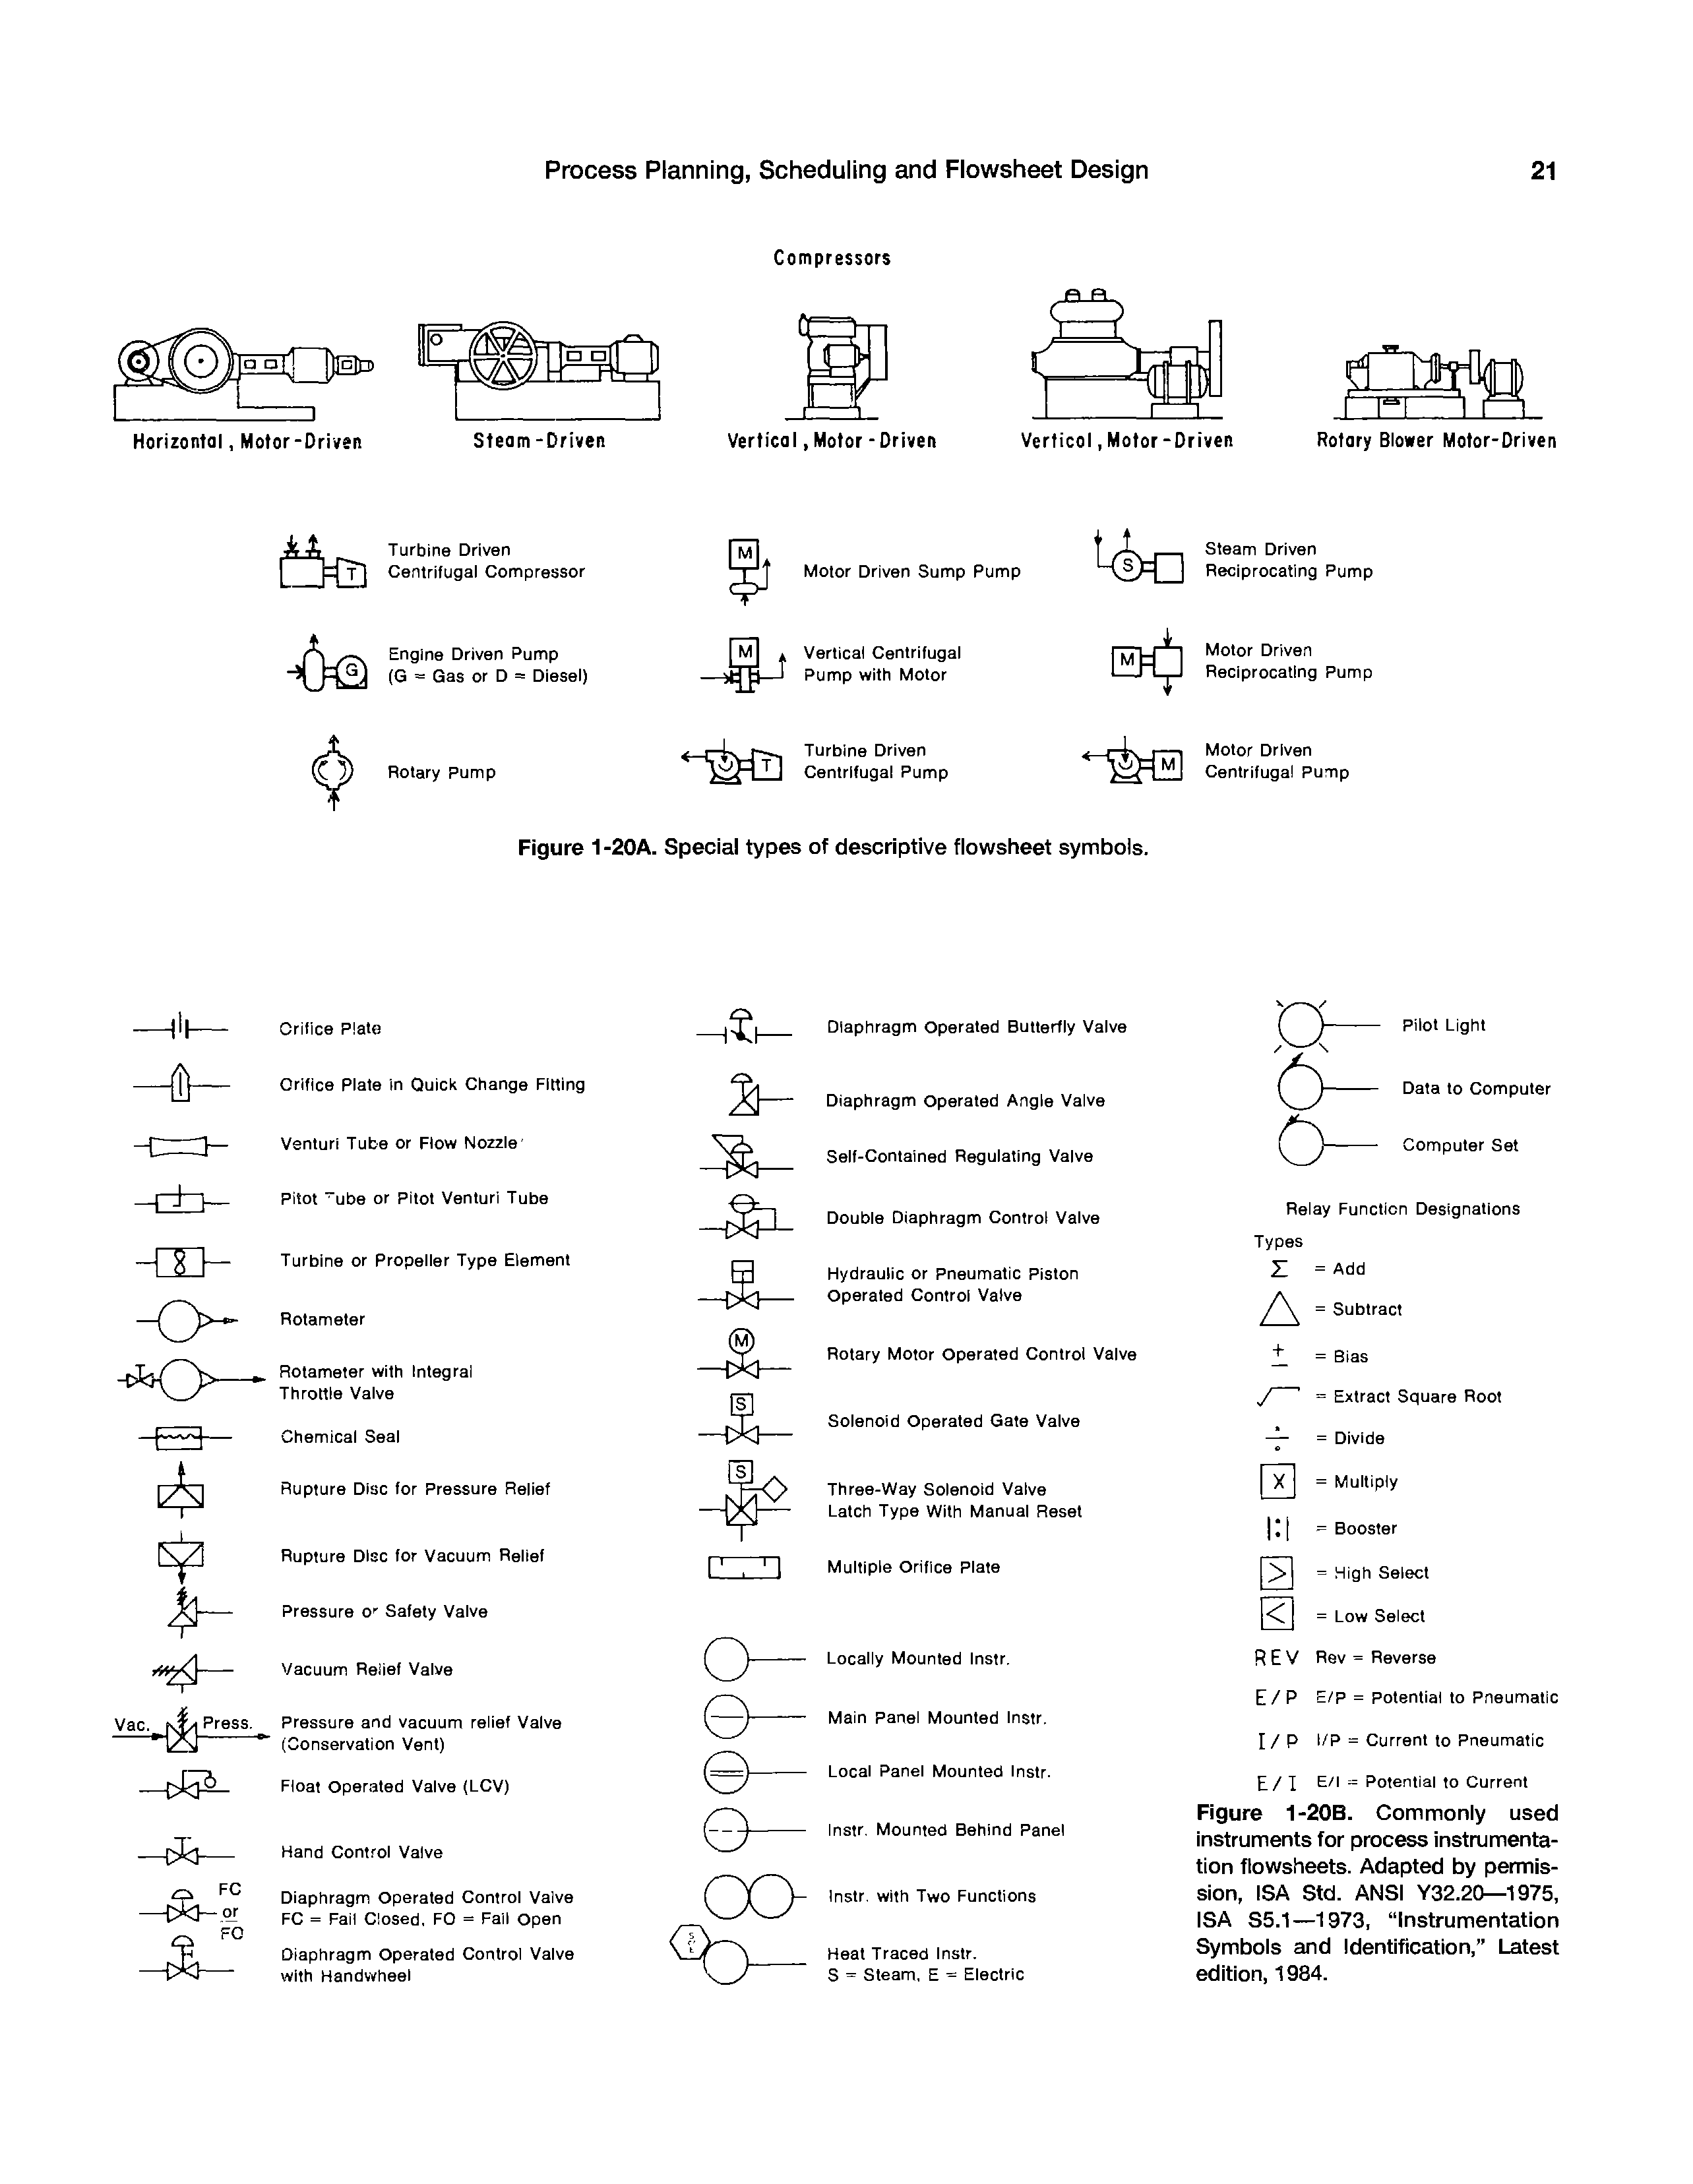 Figure 1-20A. Special types of descriptive flowsheet symbols.